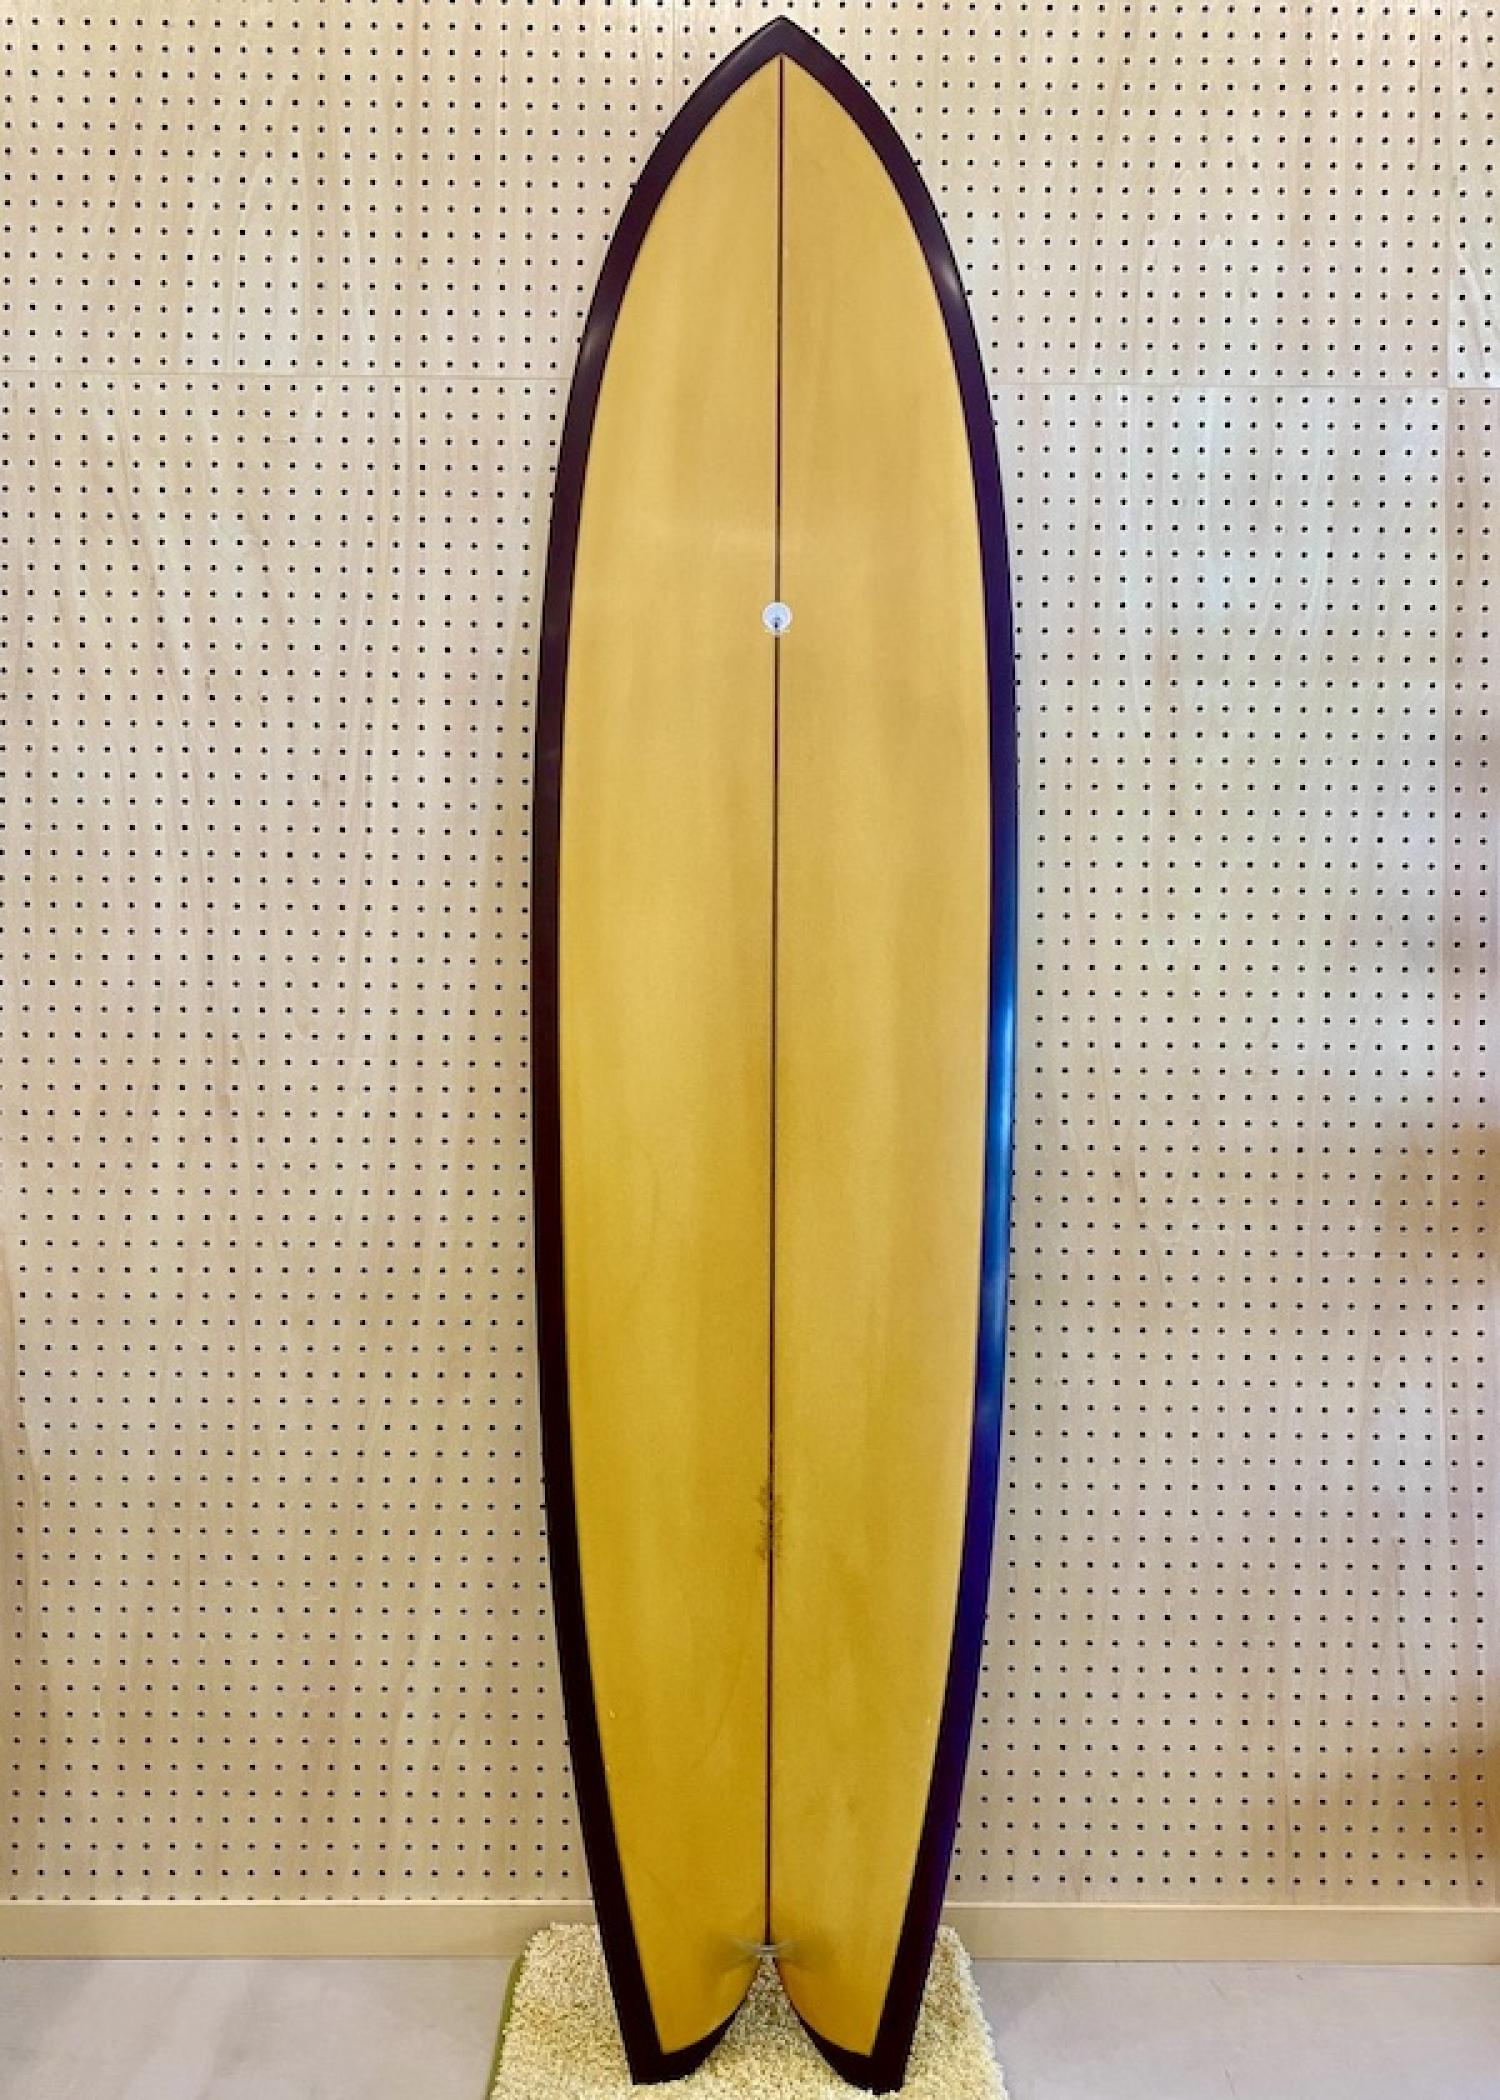 Michael Miller Surfboards|沖縄サーフィンショップ「YES SURF」